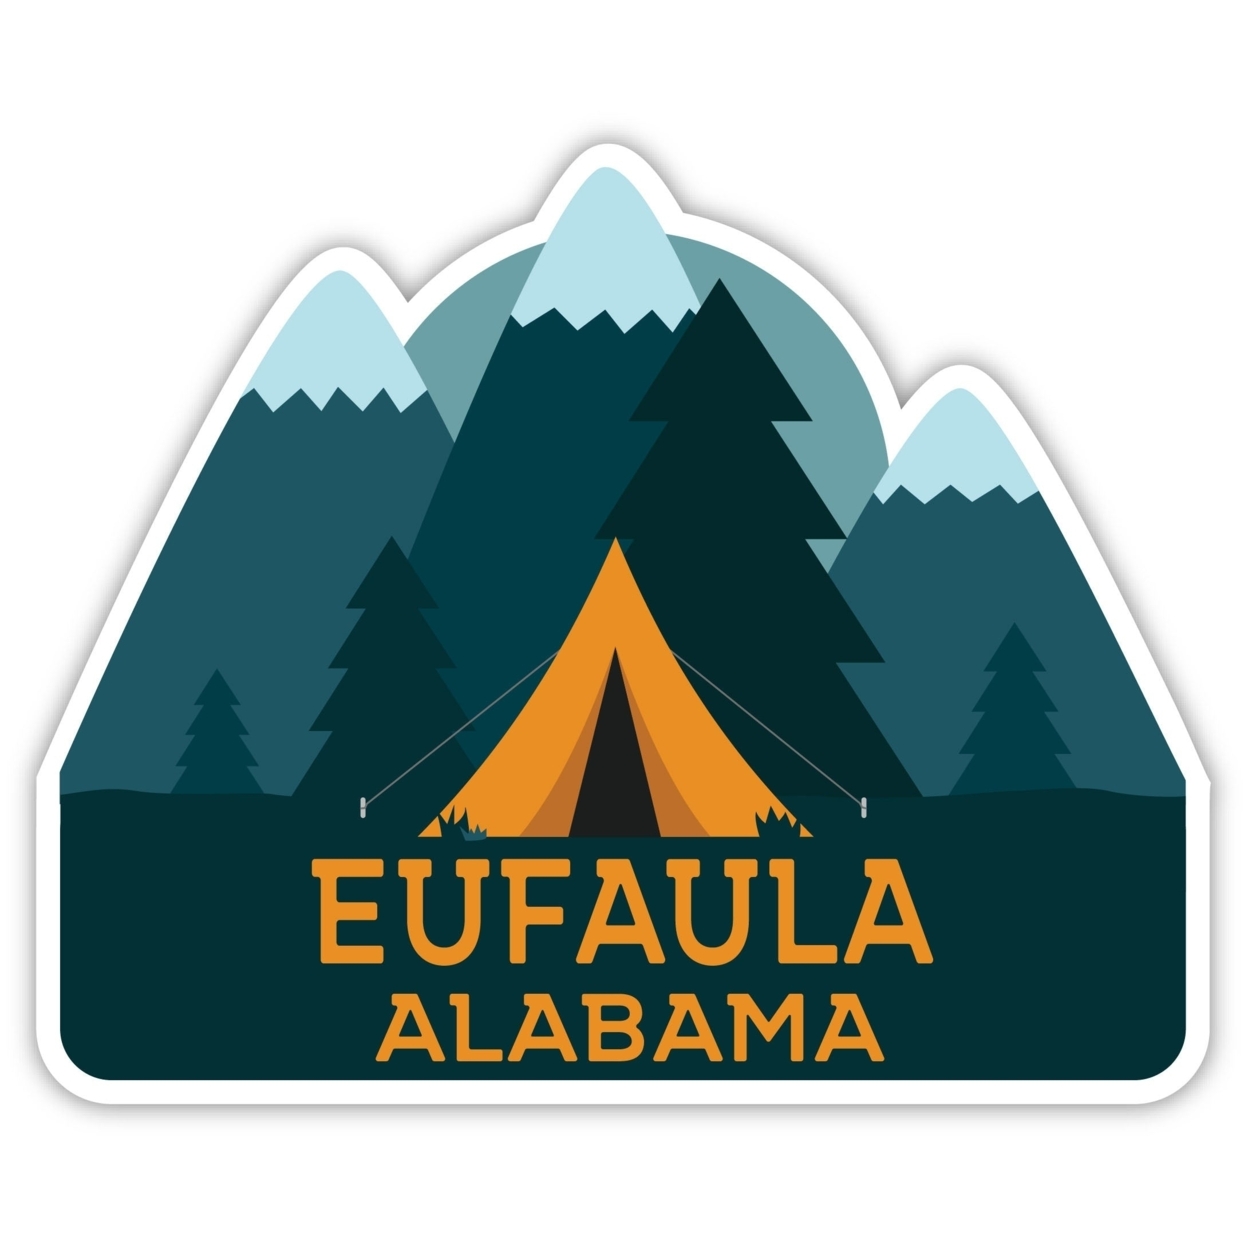 Eufaula Alabama Souvenir Decorative Stickers (Choose Theme And Size) - Single Unit, 12-Inch, Camp Life